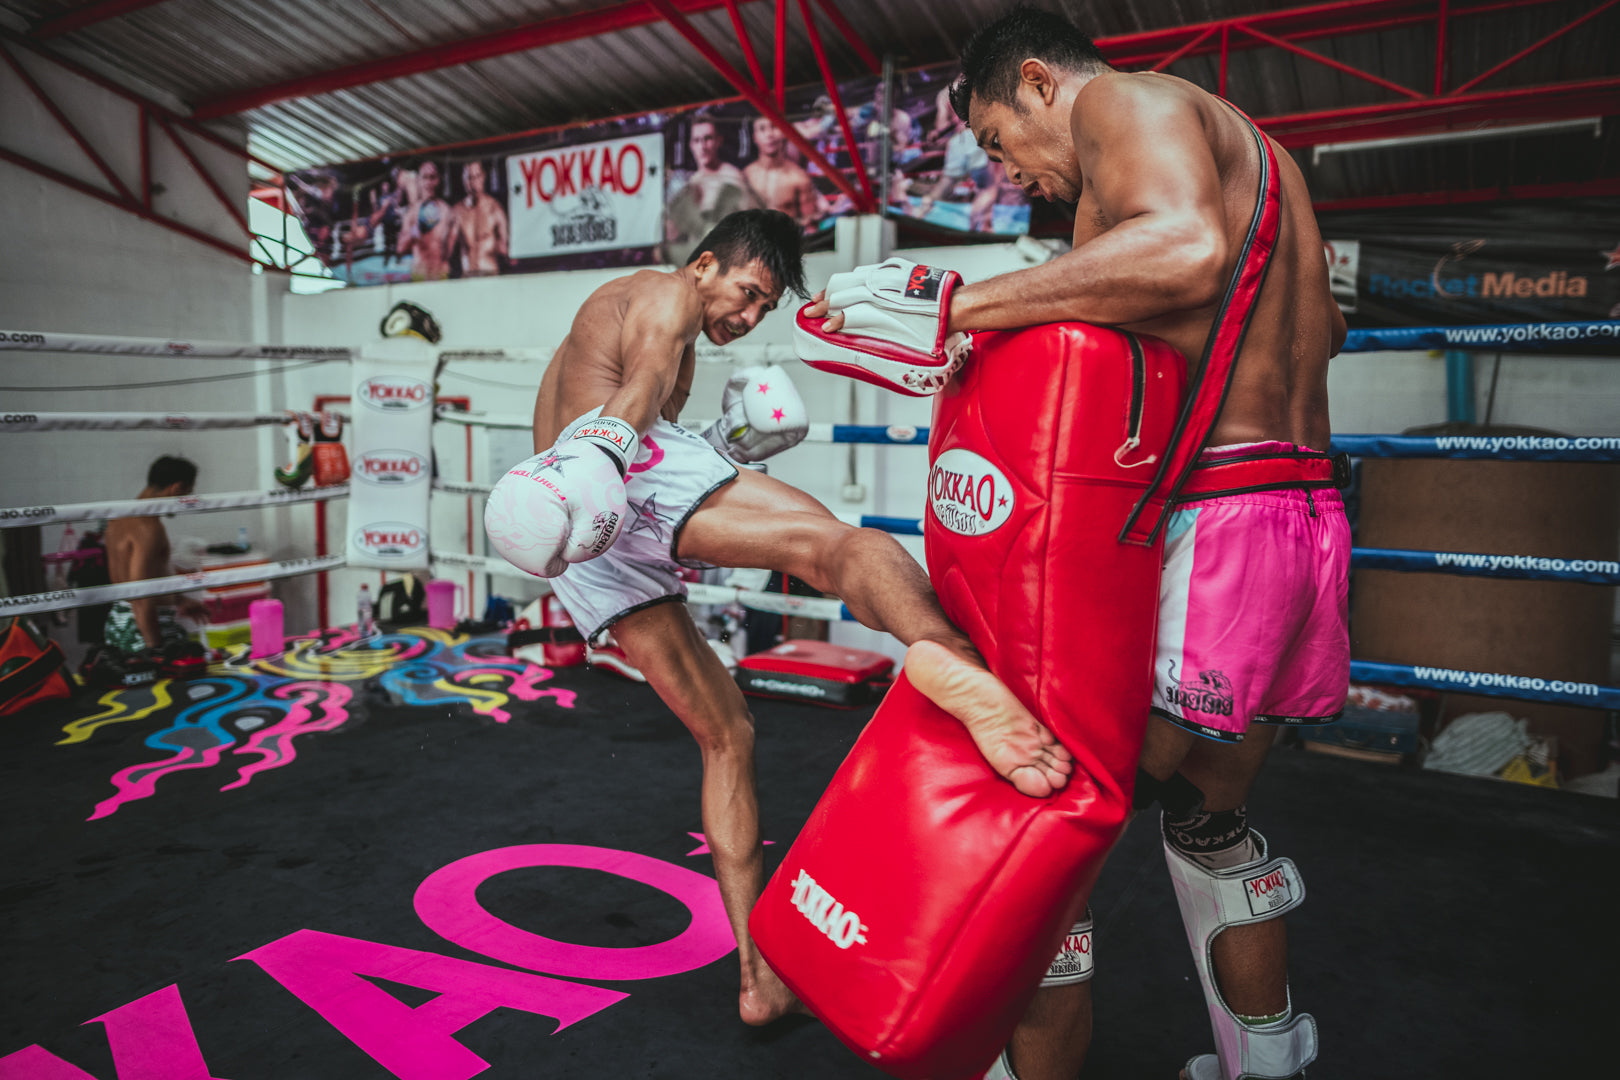 Muay Thai Kickboxing The Garuda Socks by KewaleeTee